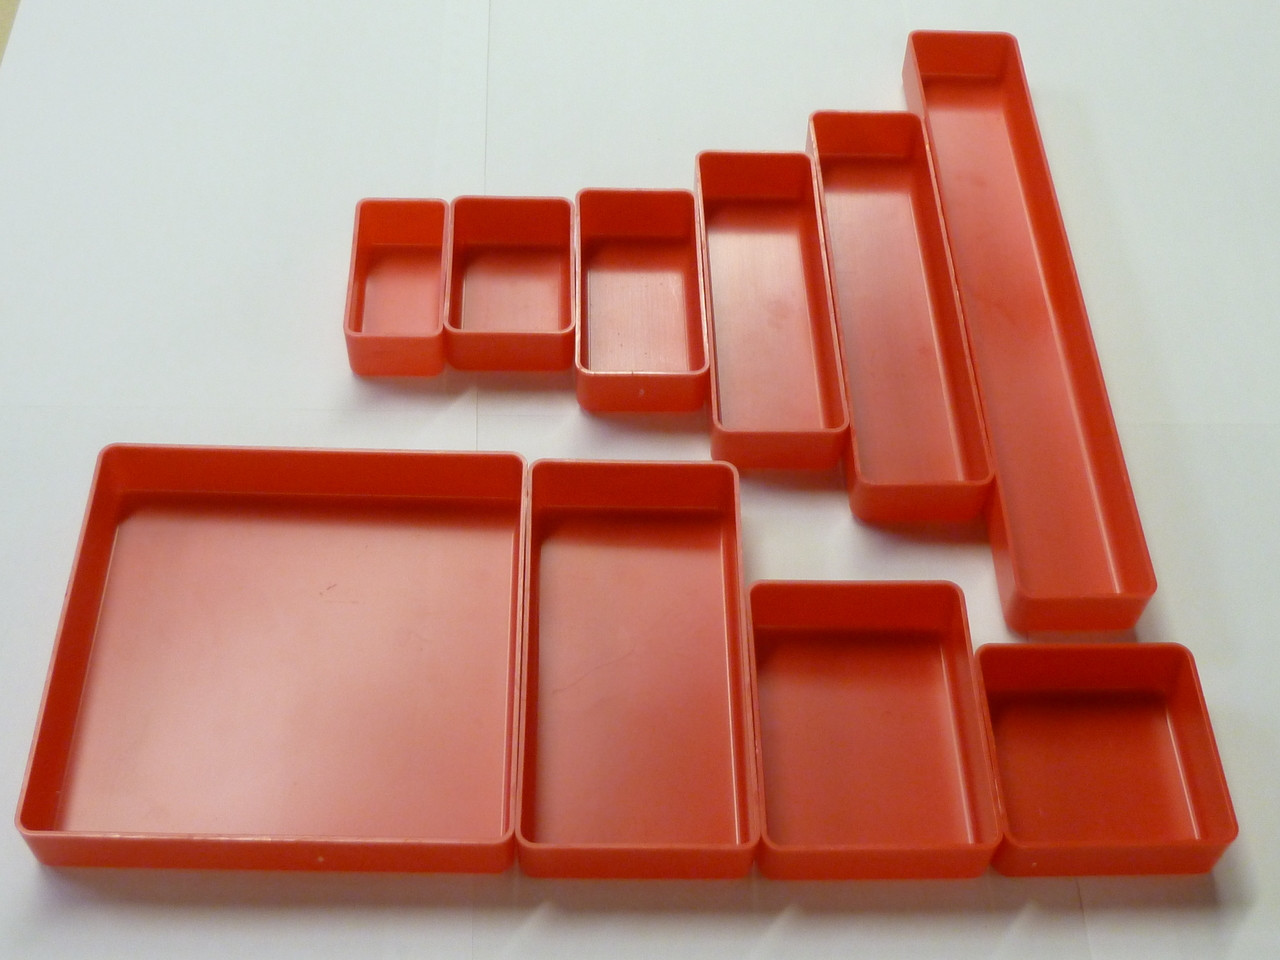 94 pc Red Plastic Box Assortment . 2 deep .Ten (10) sizes